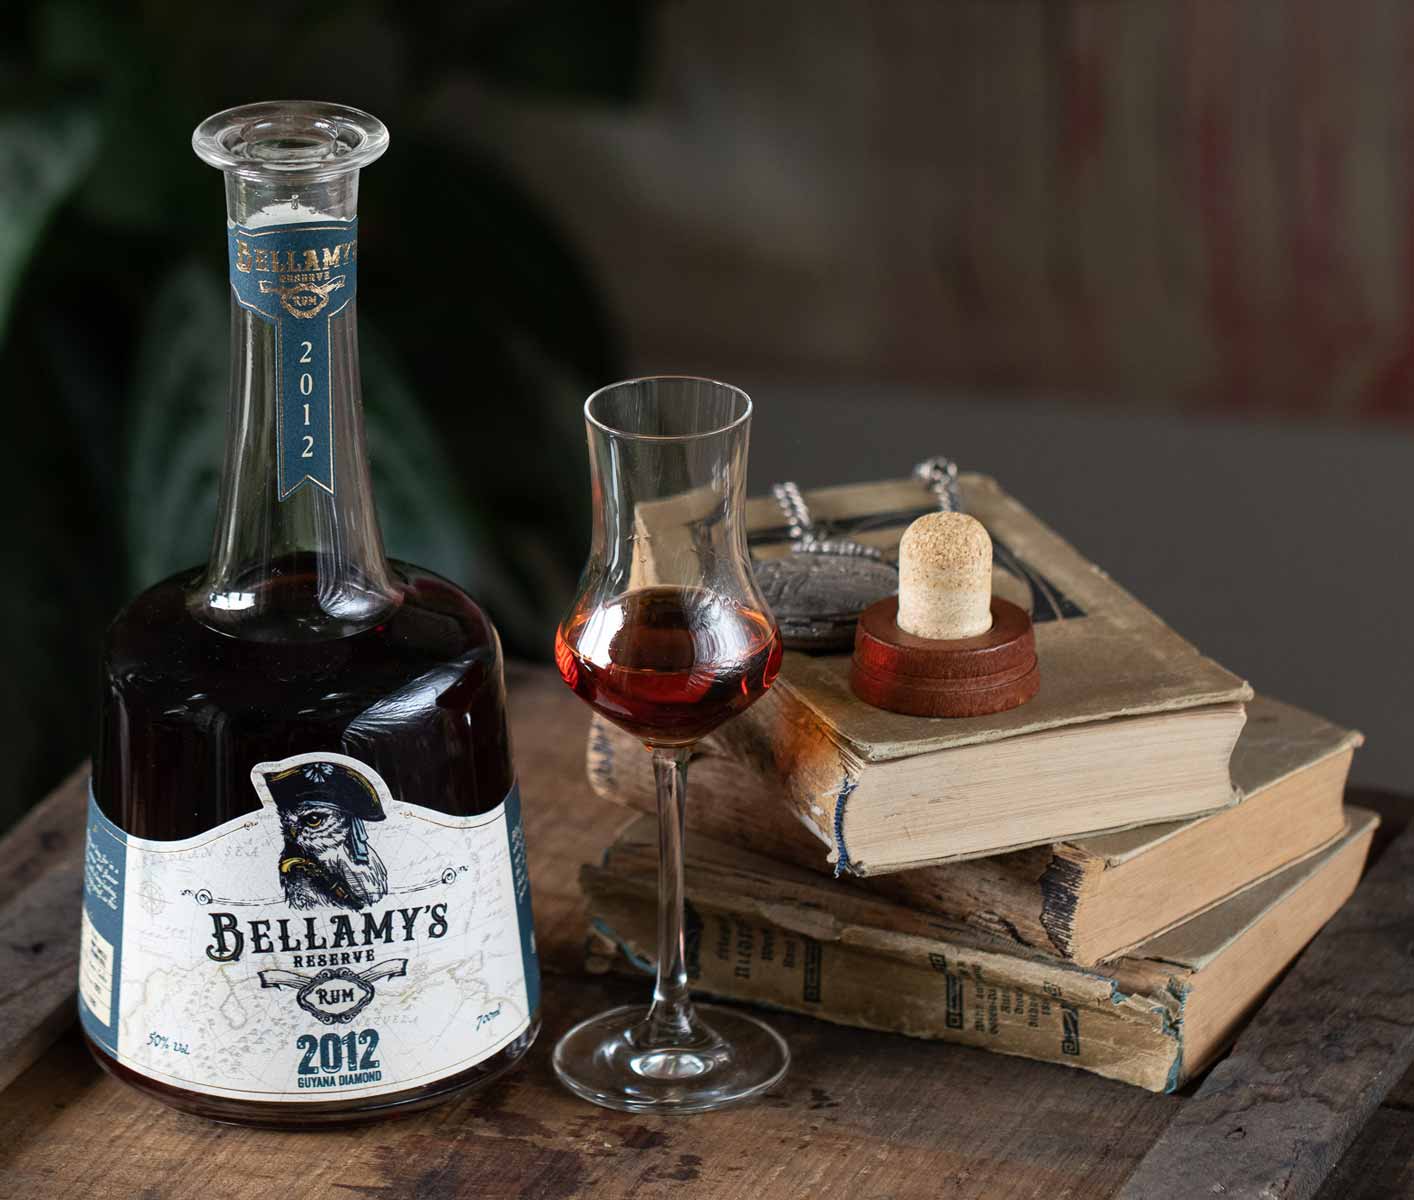 BELLAMY'S RESERVE RUM 2012 Guyana | Diamond Distillery | 9YO Rum Distilled 11/2012 Bottled 01/2022